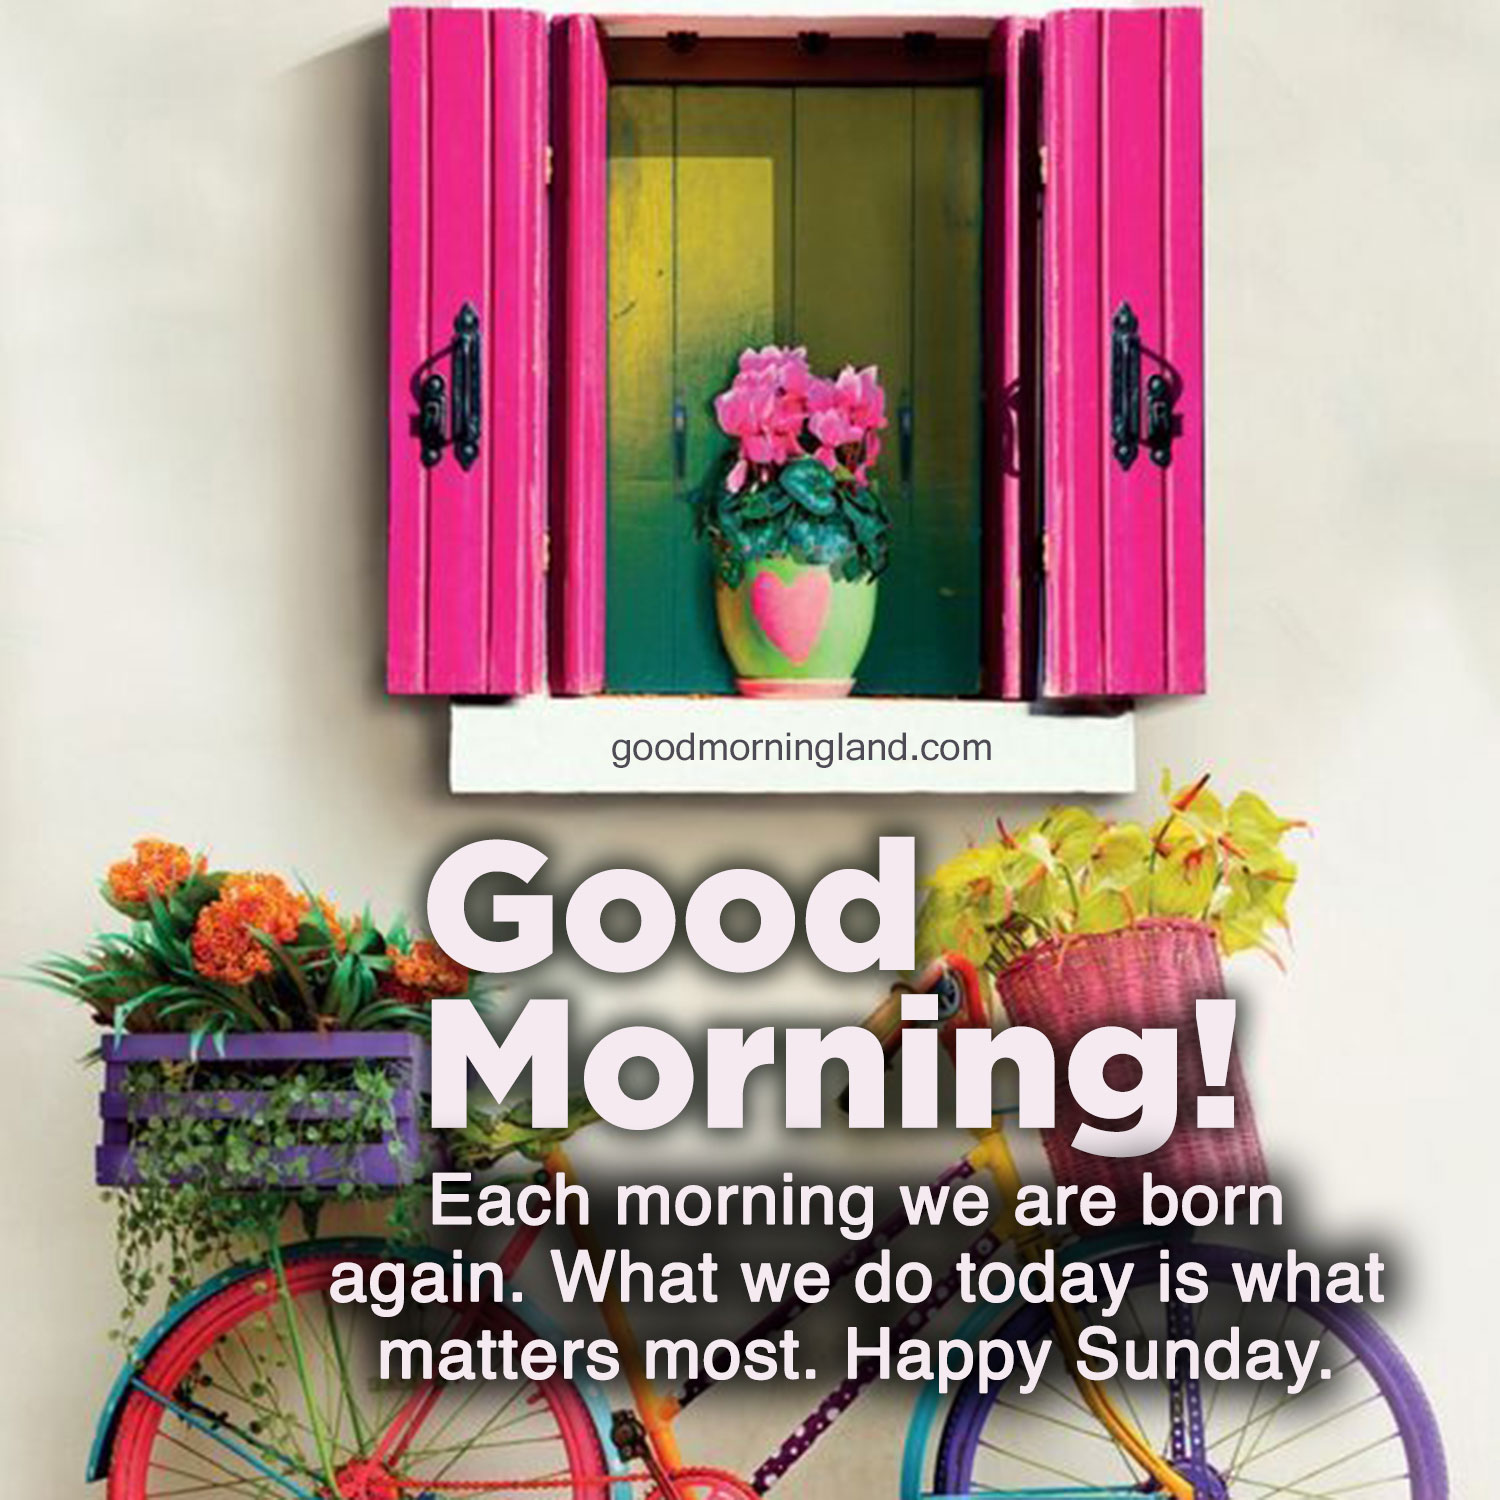 Best Good Morning Happy Sunday Ideas On Pinterest Good